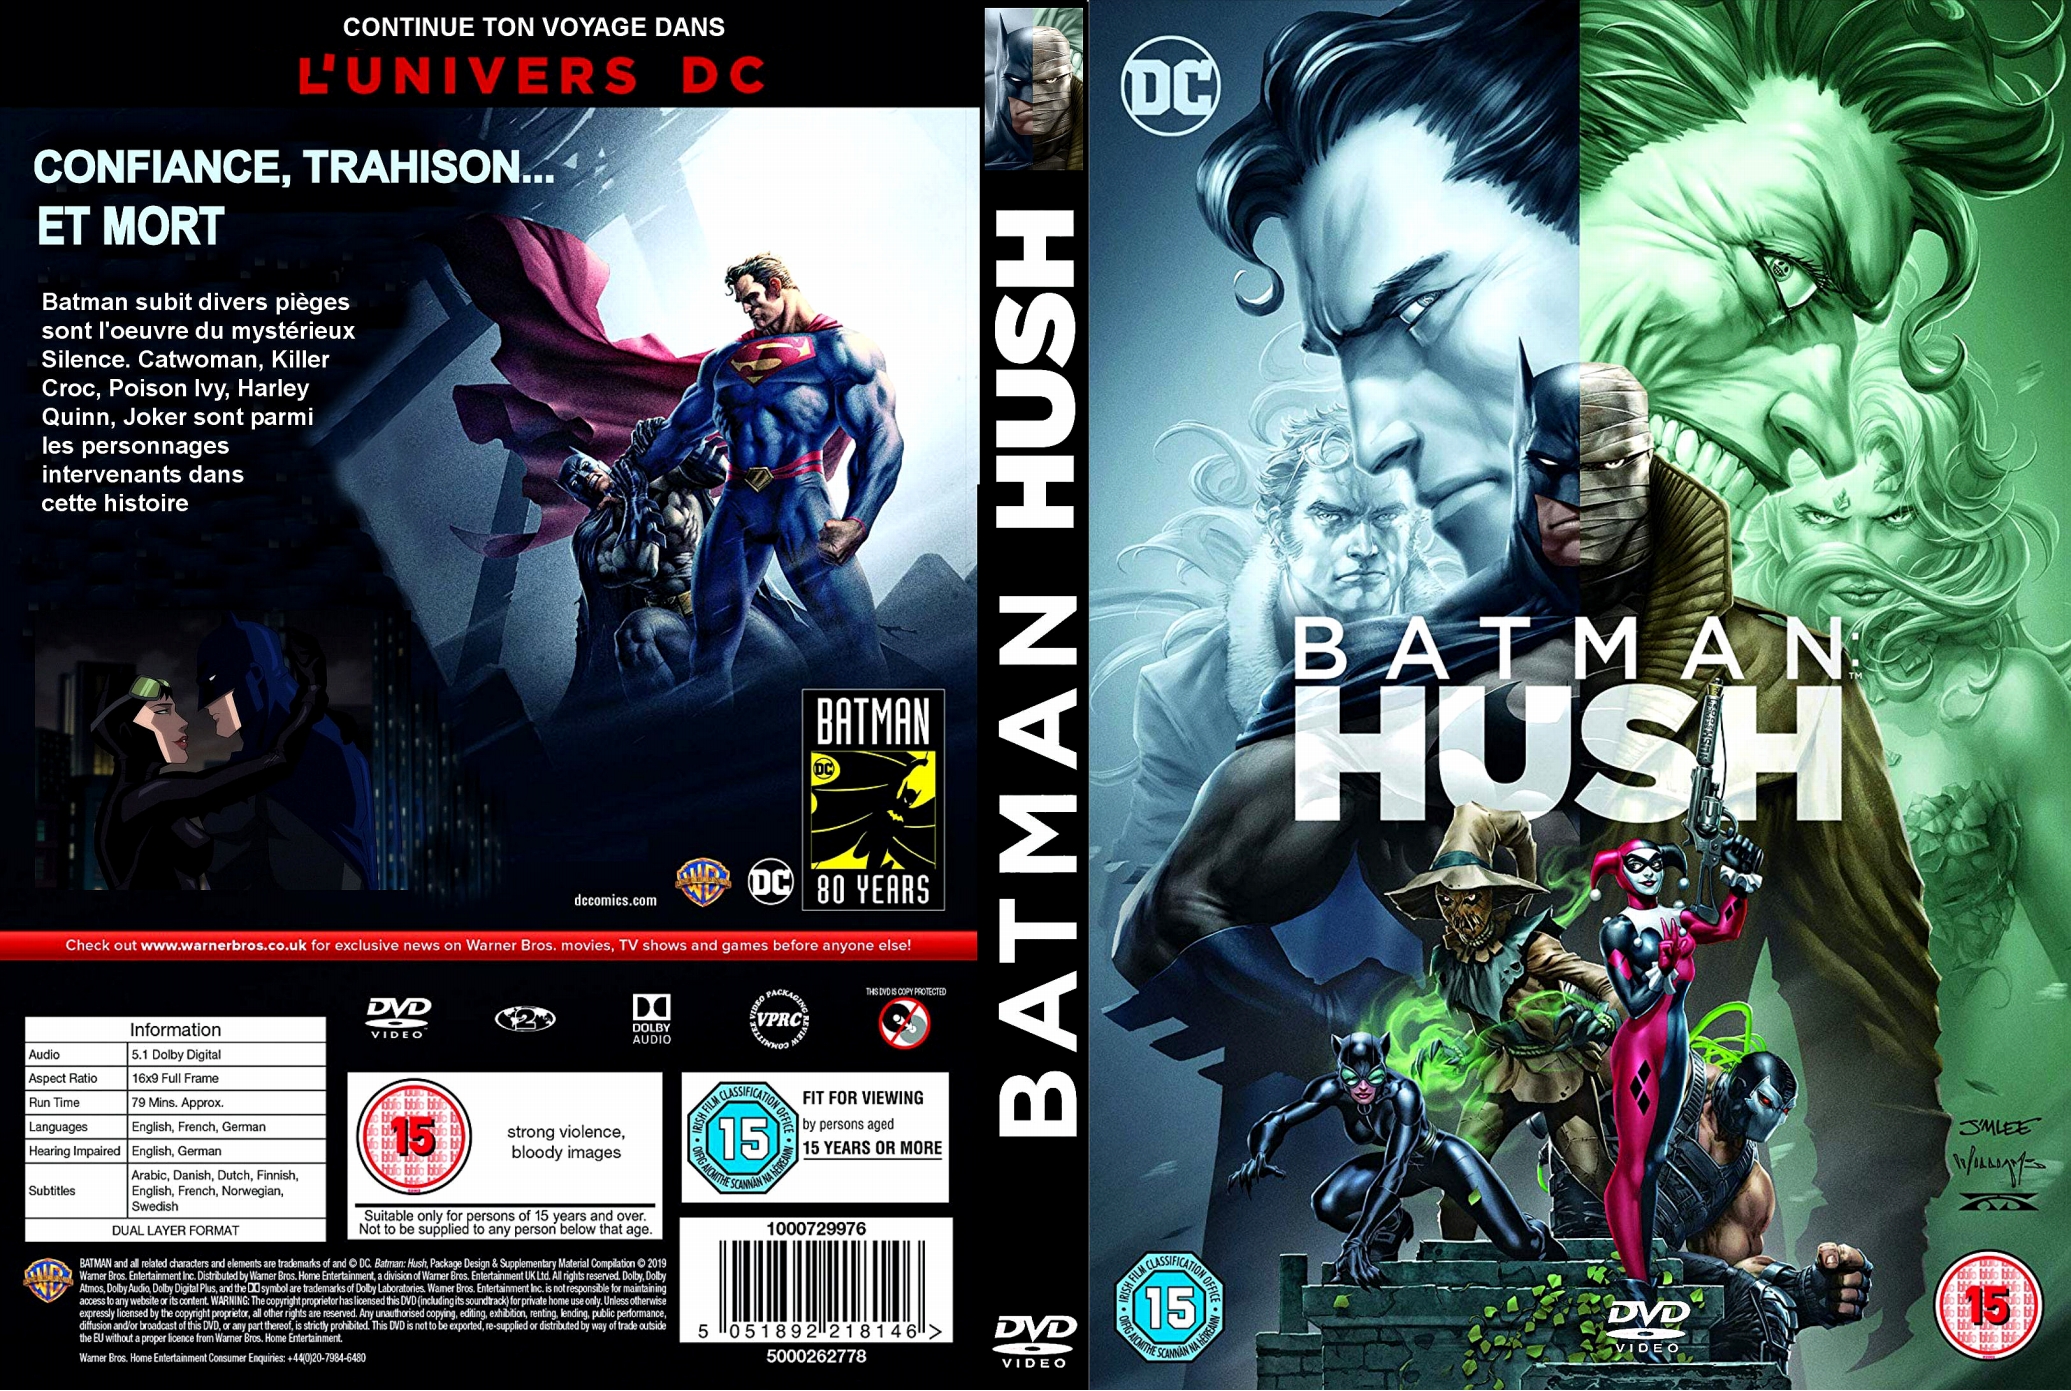 Jaquette DVD Batman Hush custom